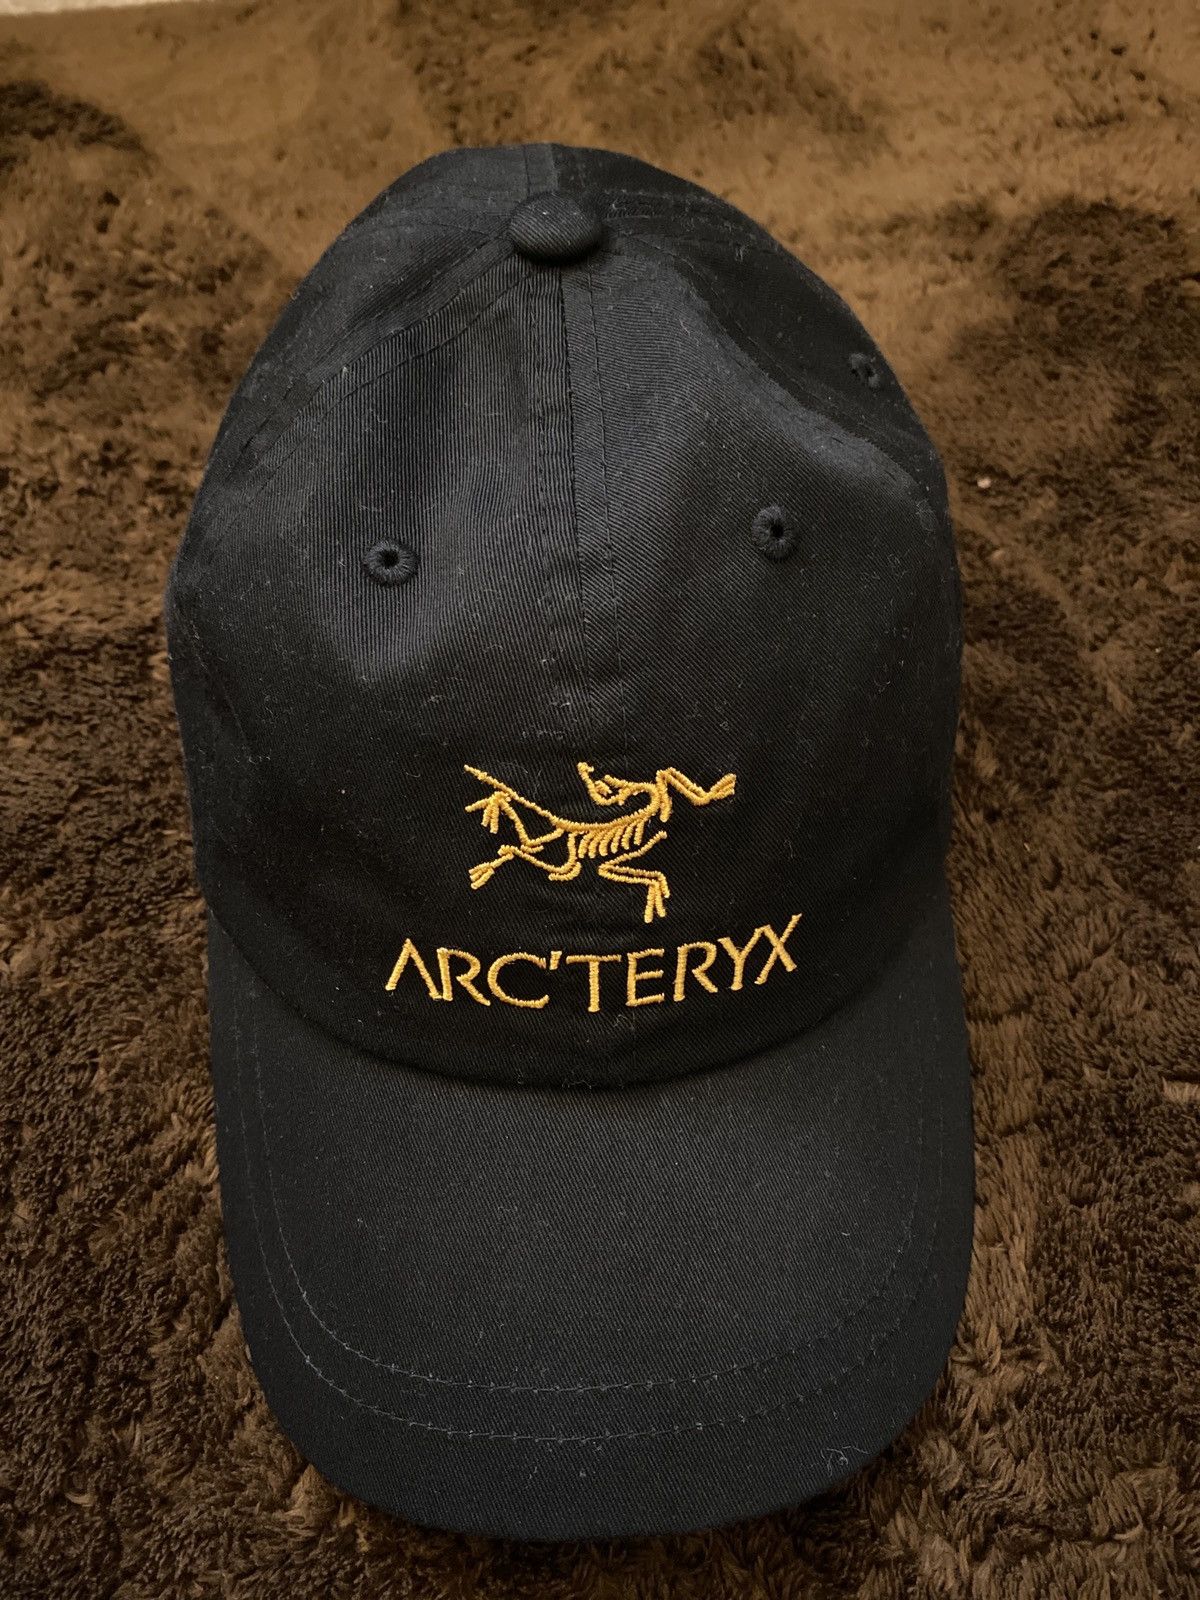 Arc'Teryx Palace x Arc'teryx 6-panel hat | Grailed